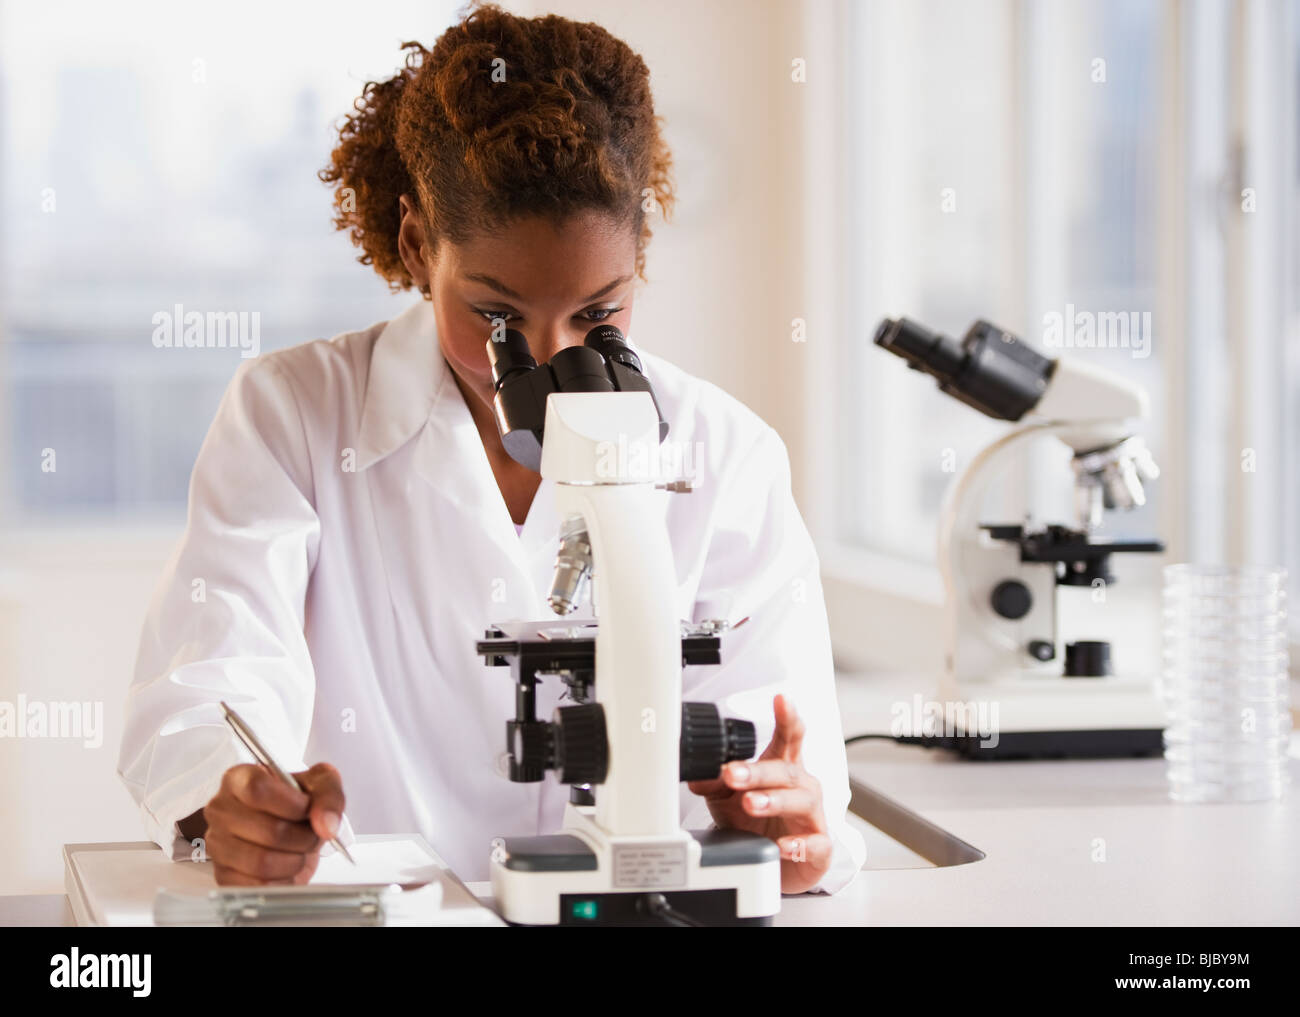 Mixed race scientist peering into microscope Stock Photo